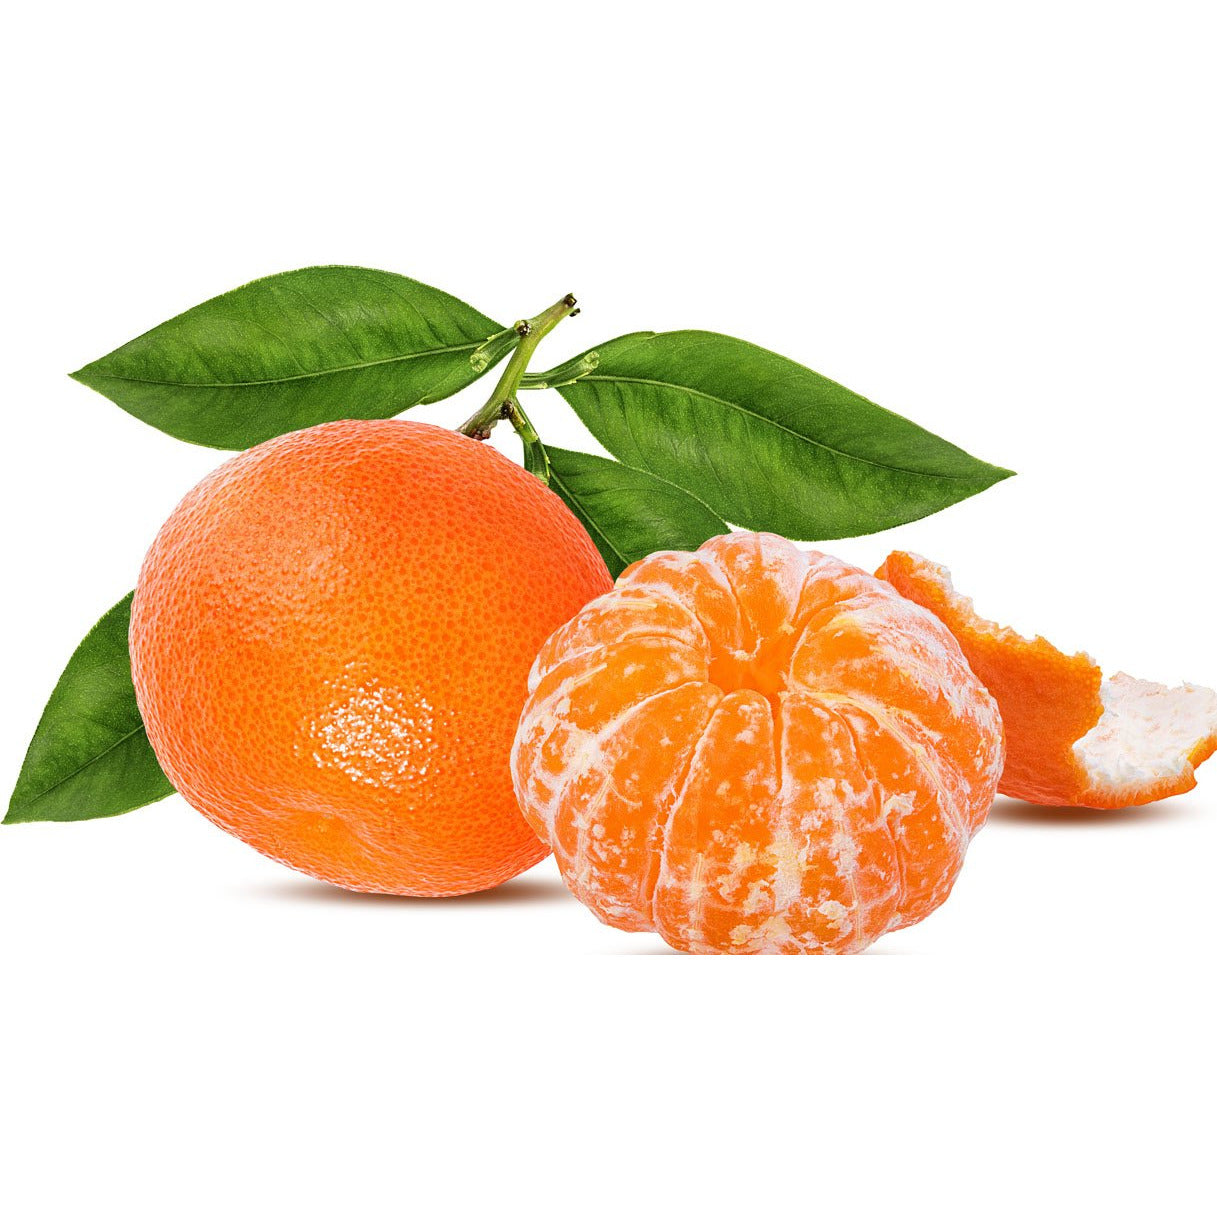 mandarino Sicilia - Justfruit